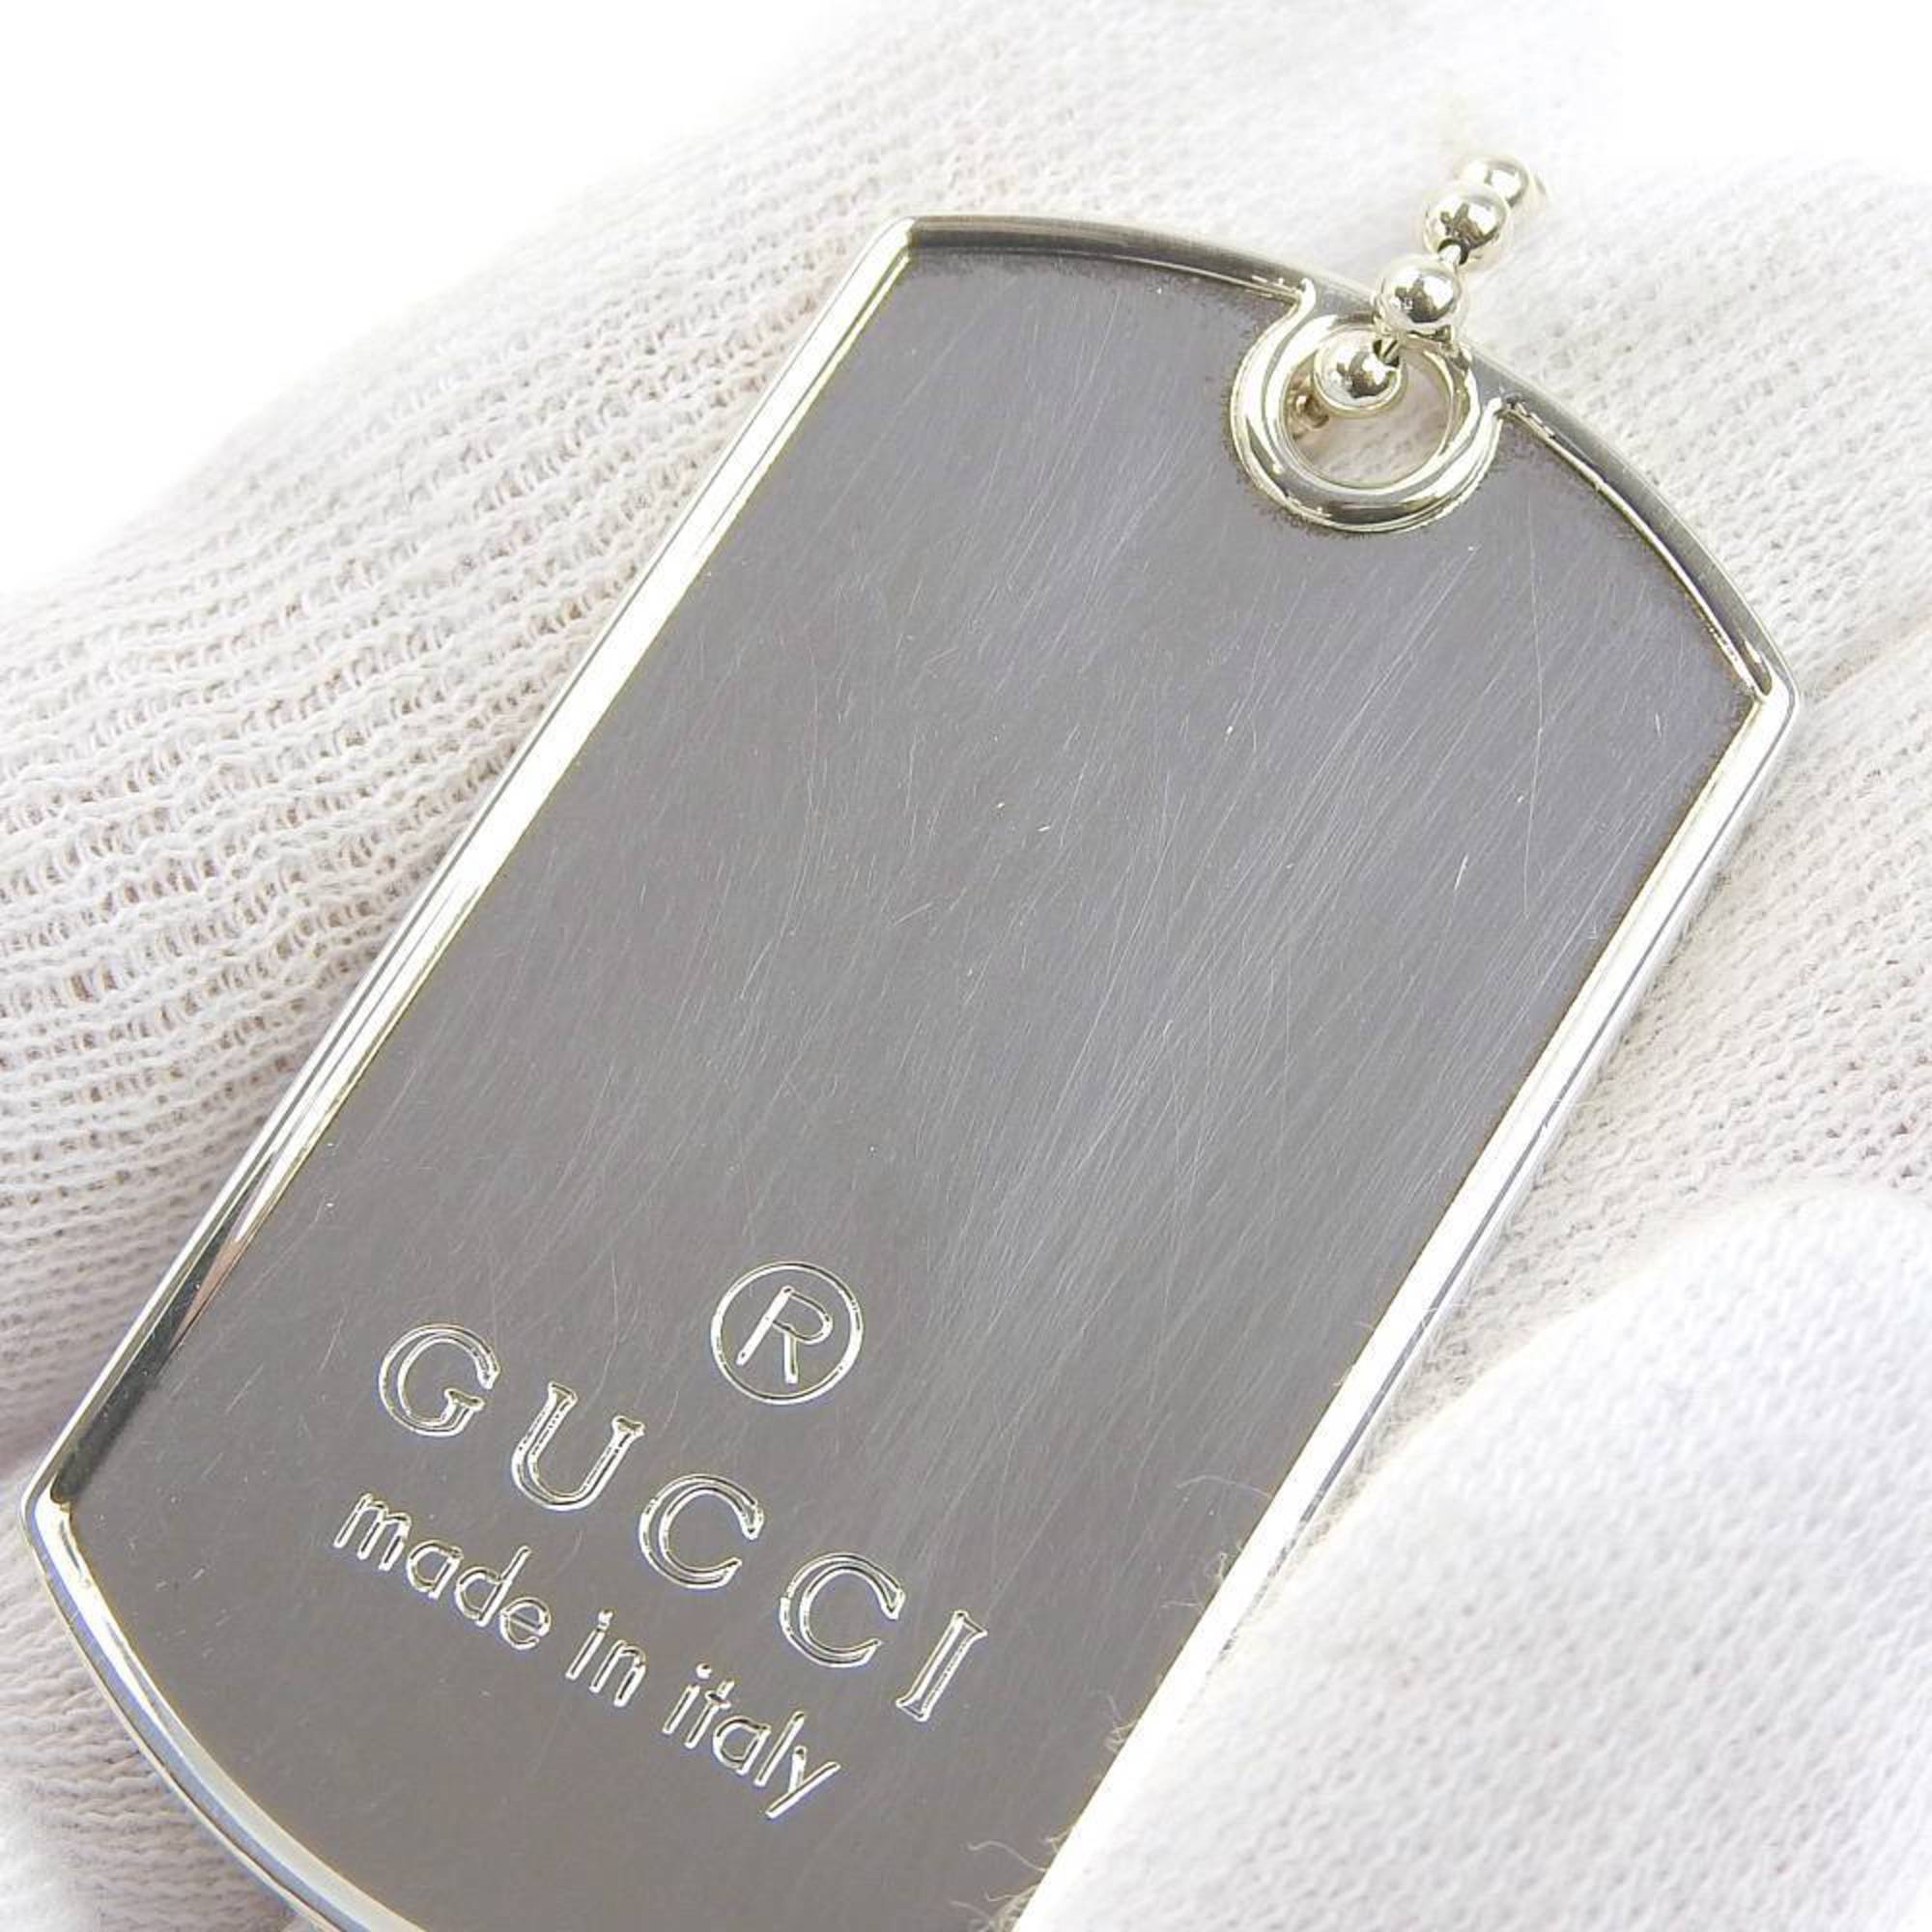 Gucci GUCCI dog tag charm SV925 silver 925